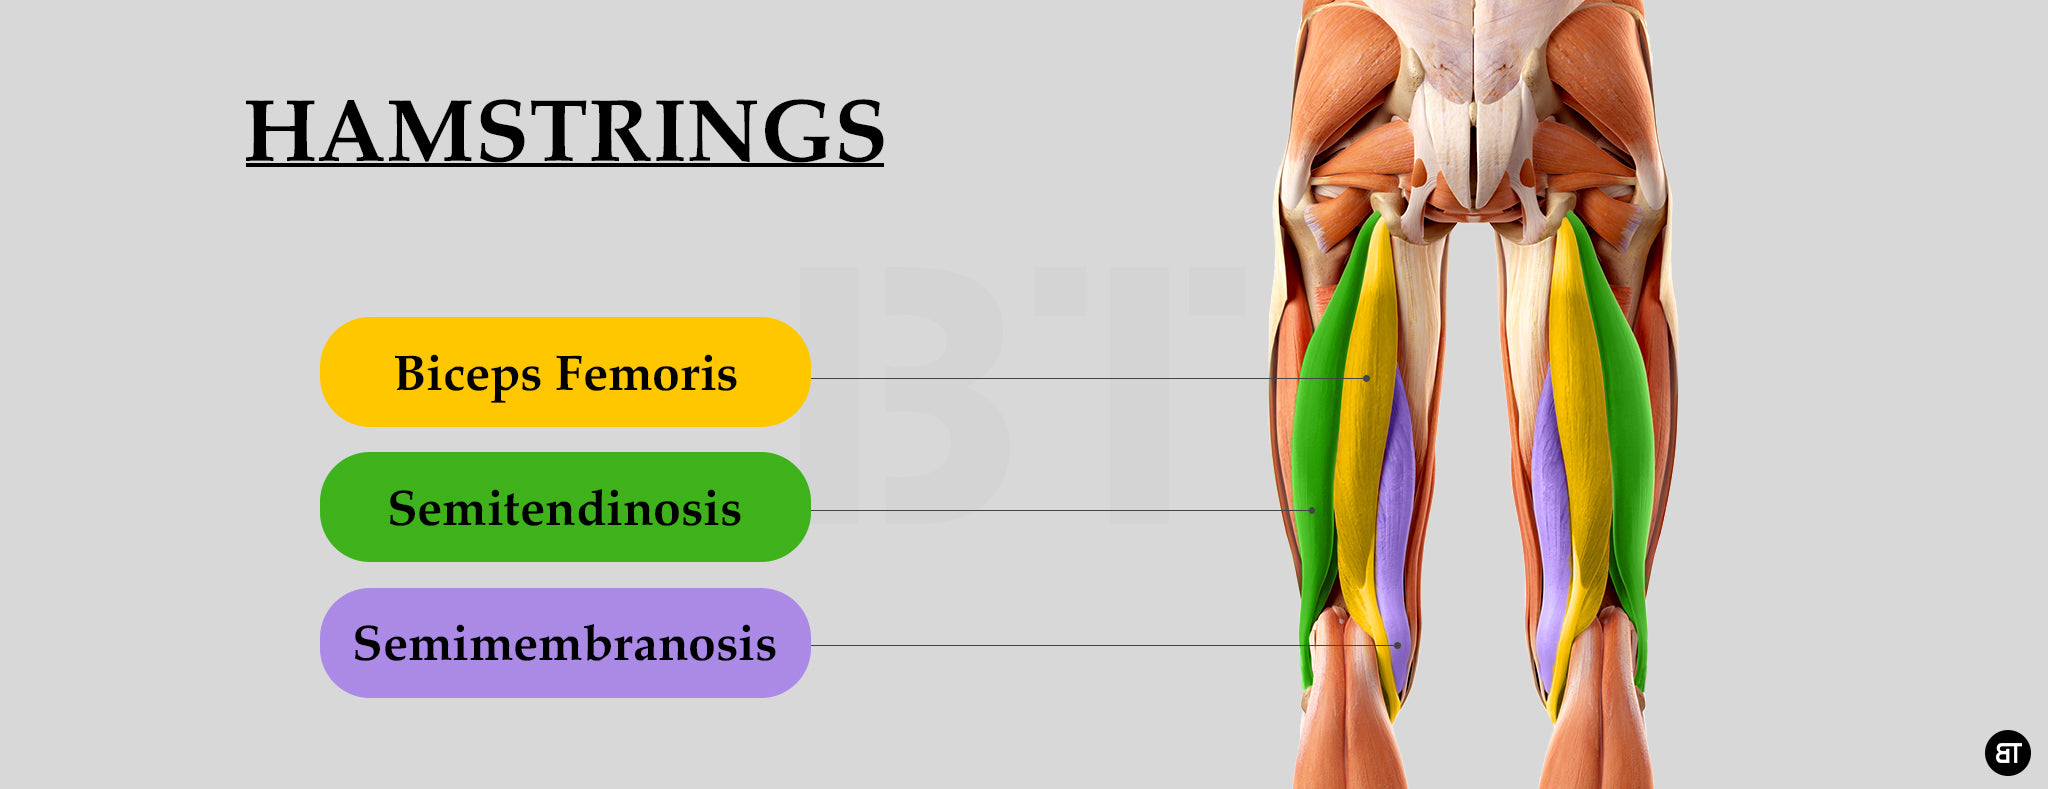 Anatomy Of Hamstring